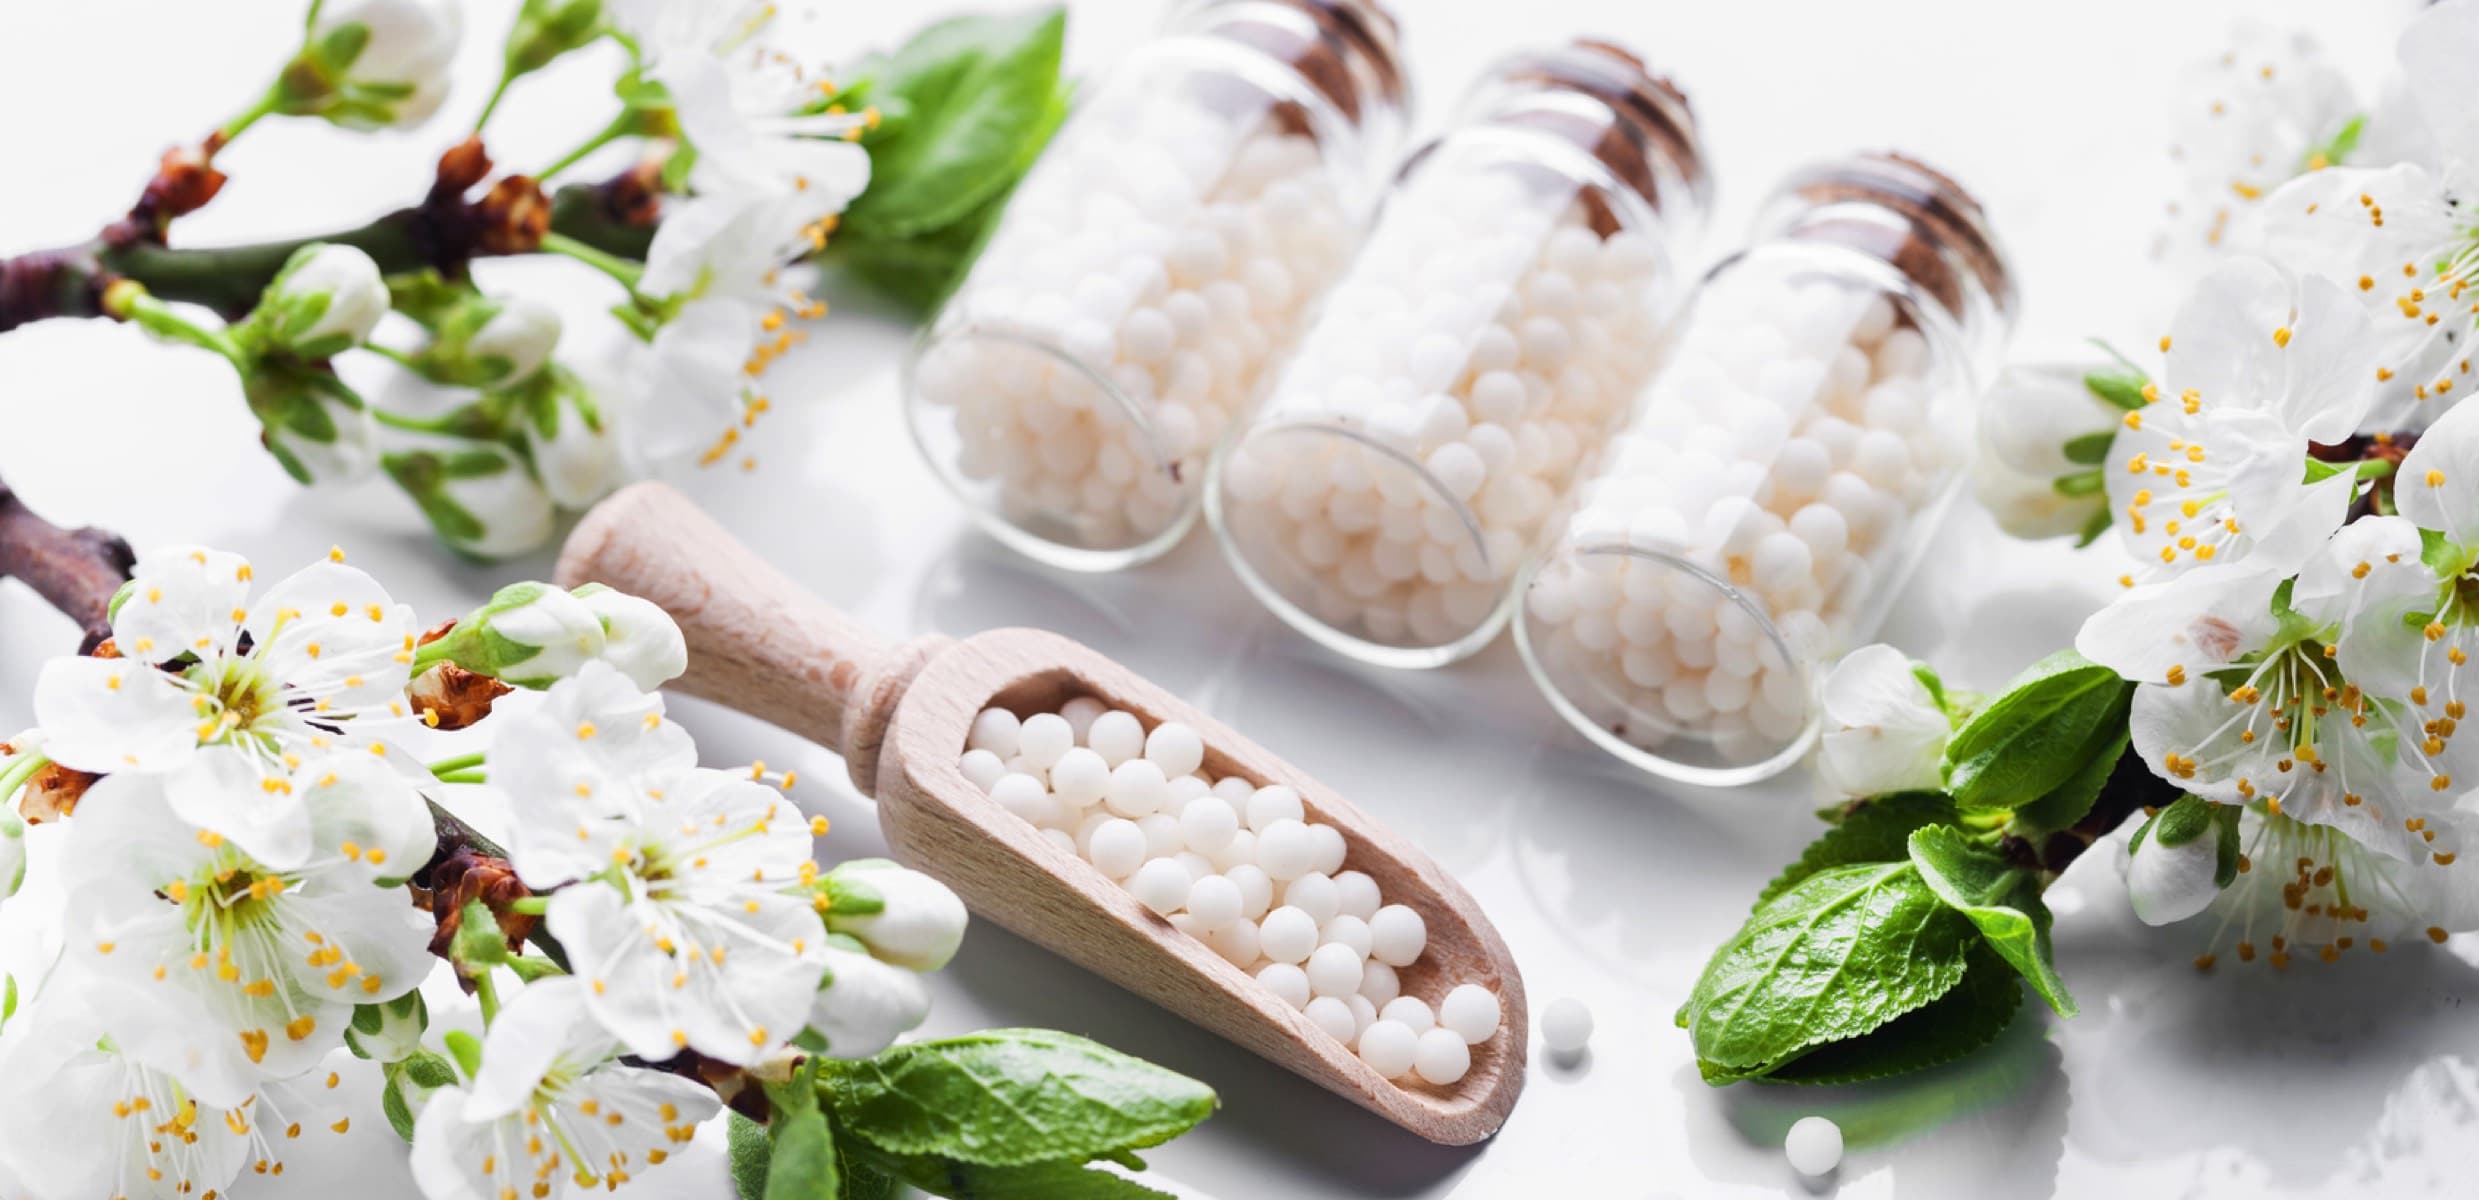 Homeopathy for natural healing